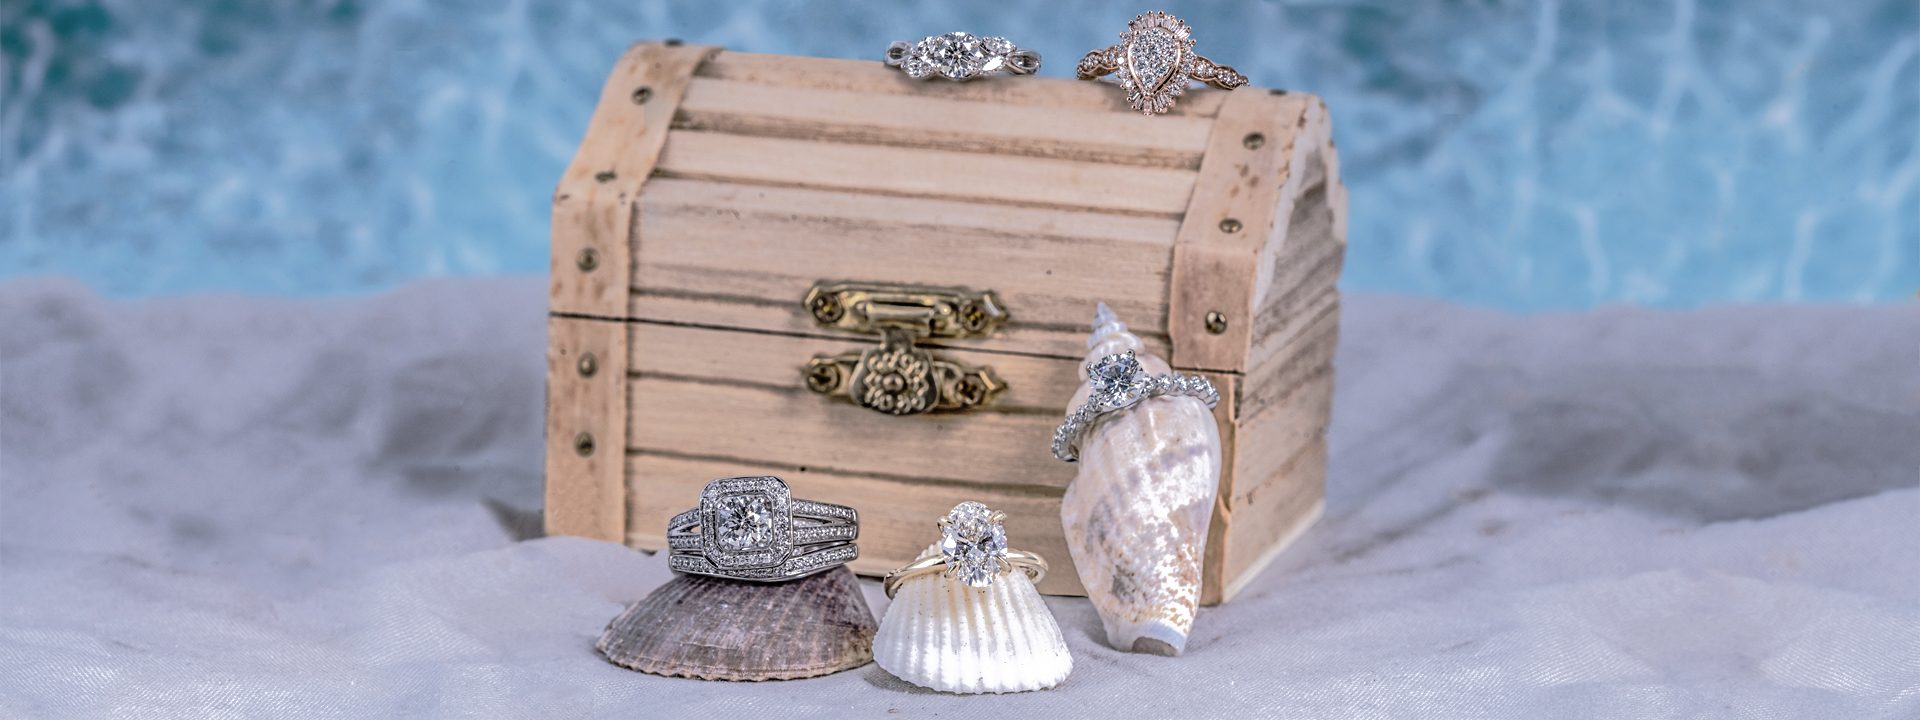 Five diamond engagement rings placed on seashells.